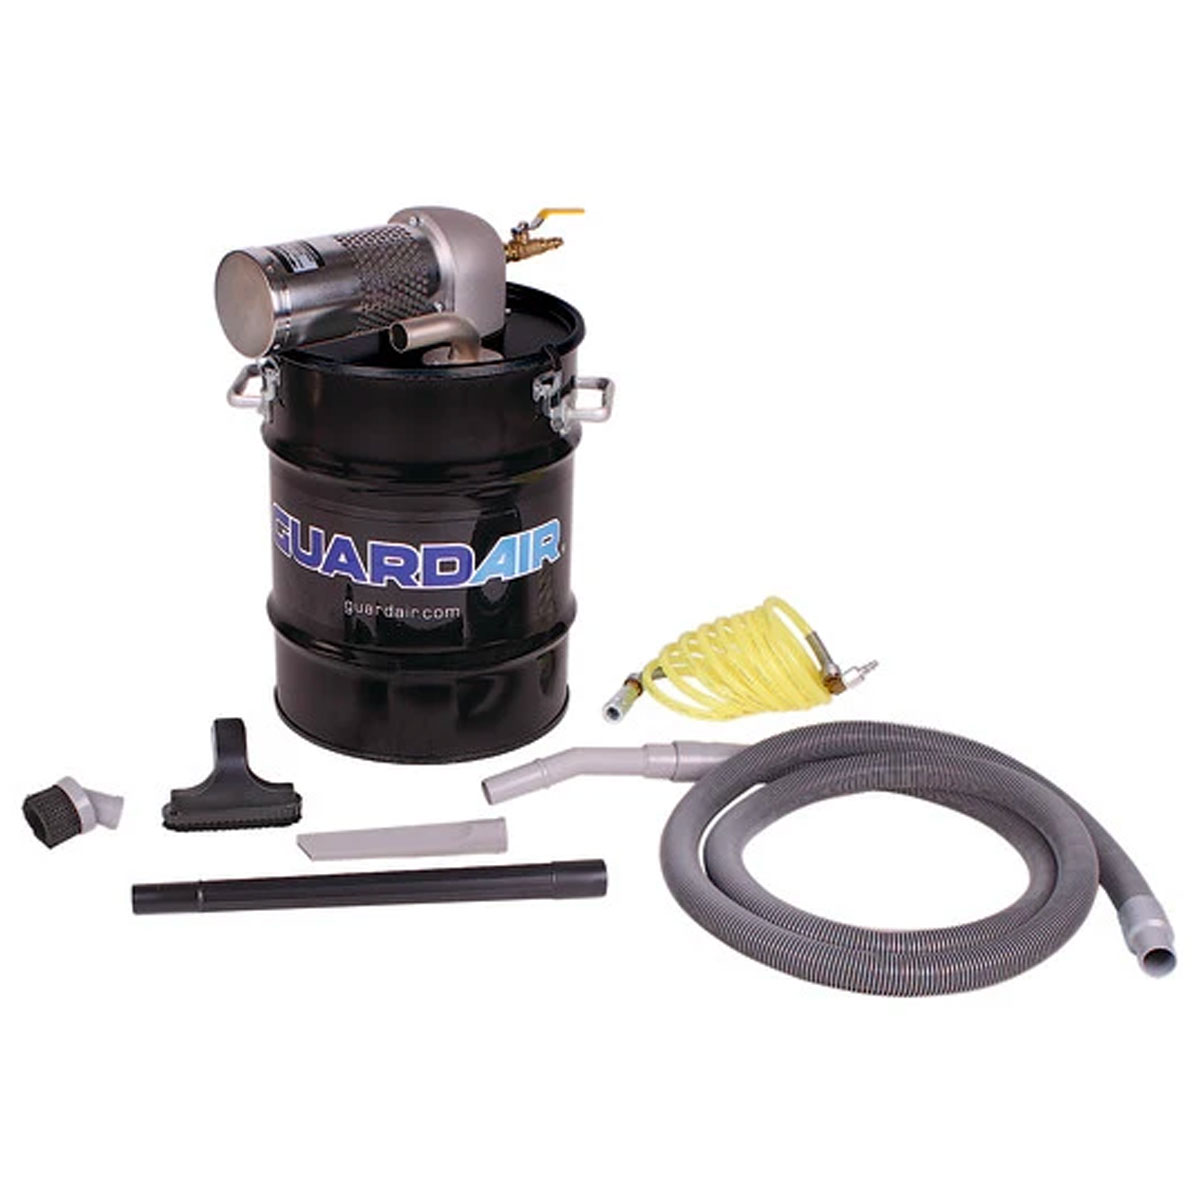 Guardair / Nortech 10 Gallon (M Venturi) Vac Kit C/W 1-1/4" Hose & Tools